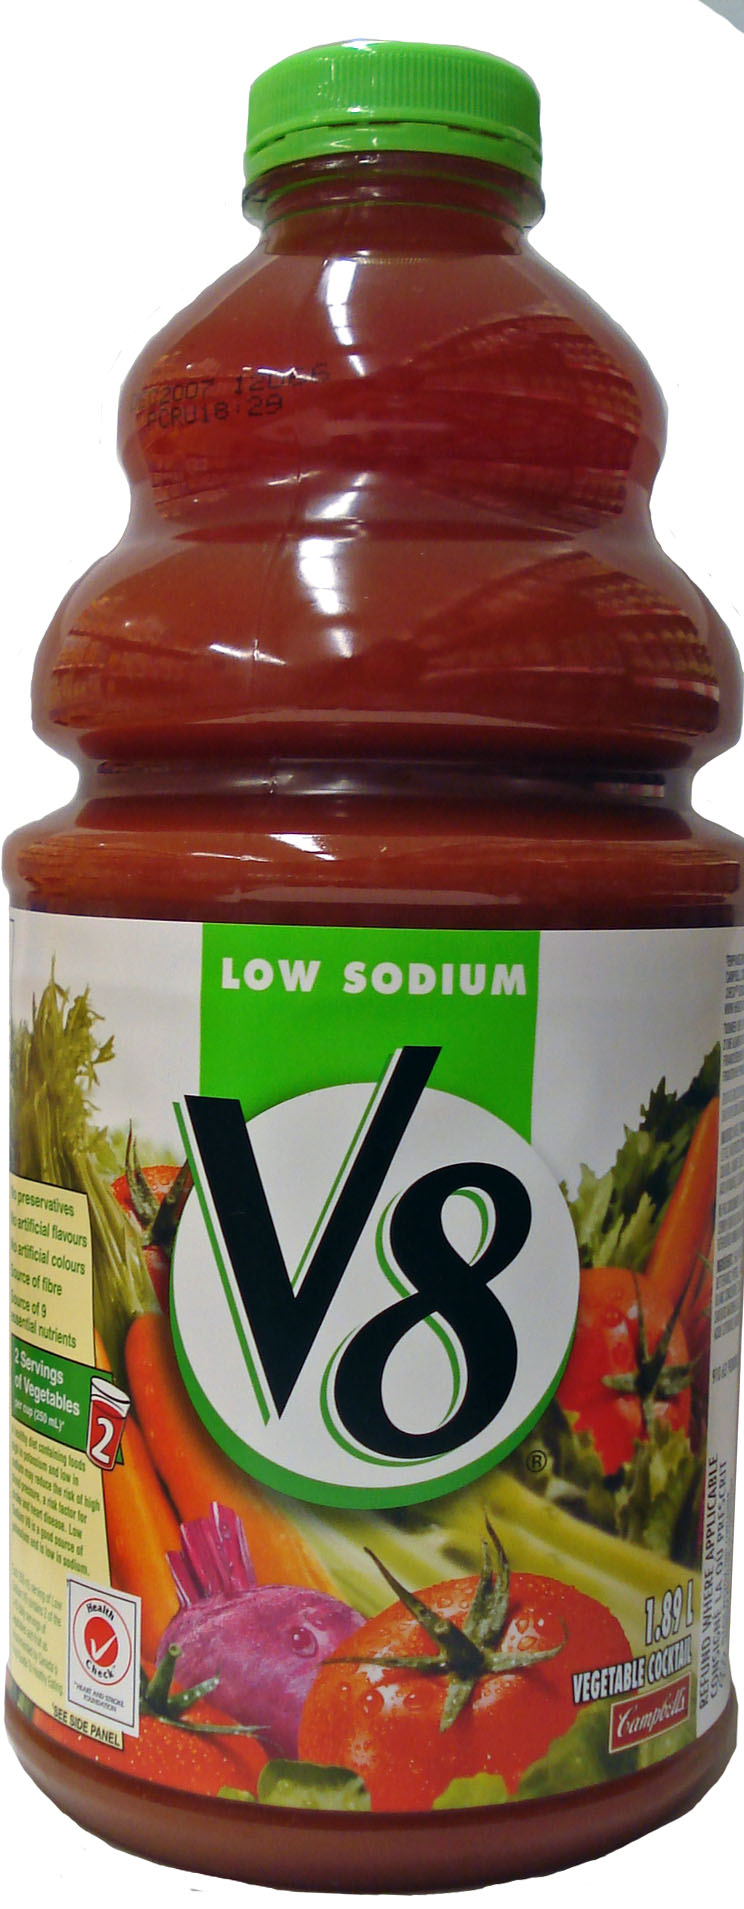 v8 vegetable juice low sodium 46oz